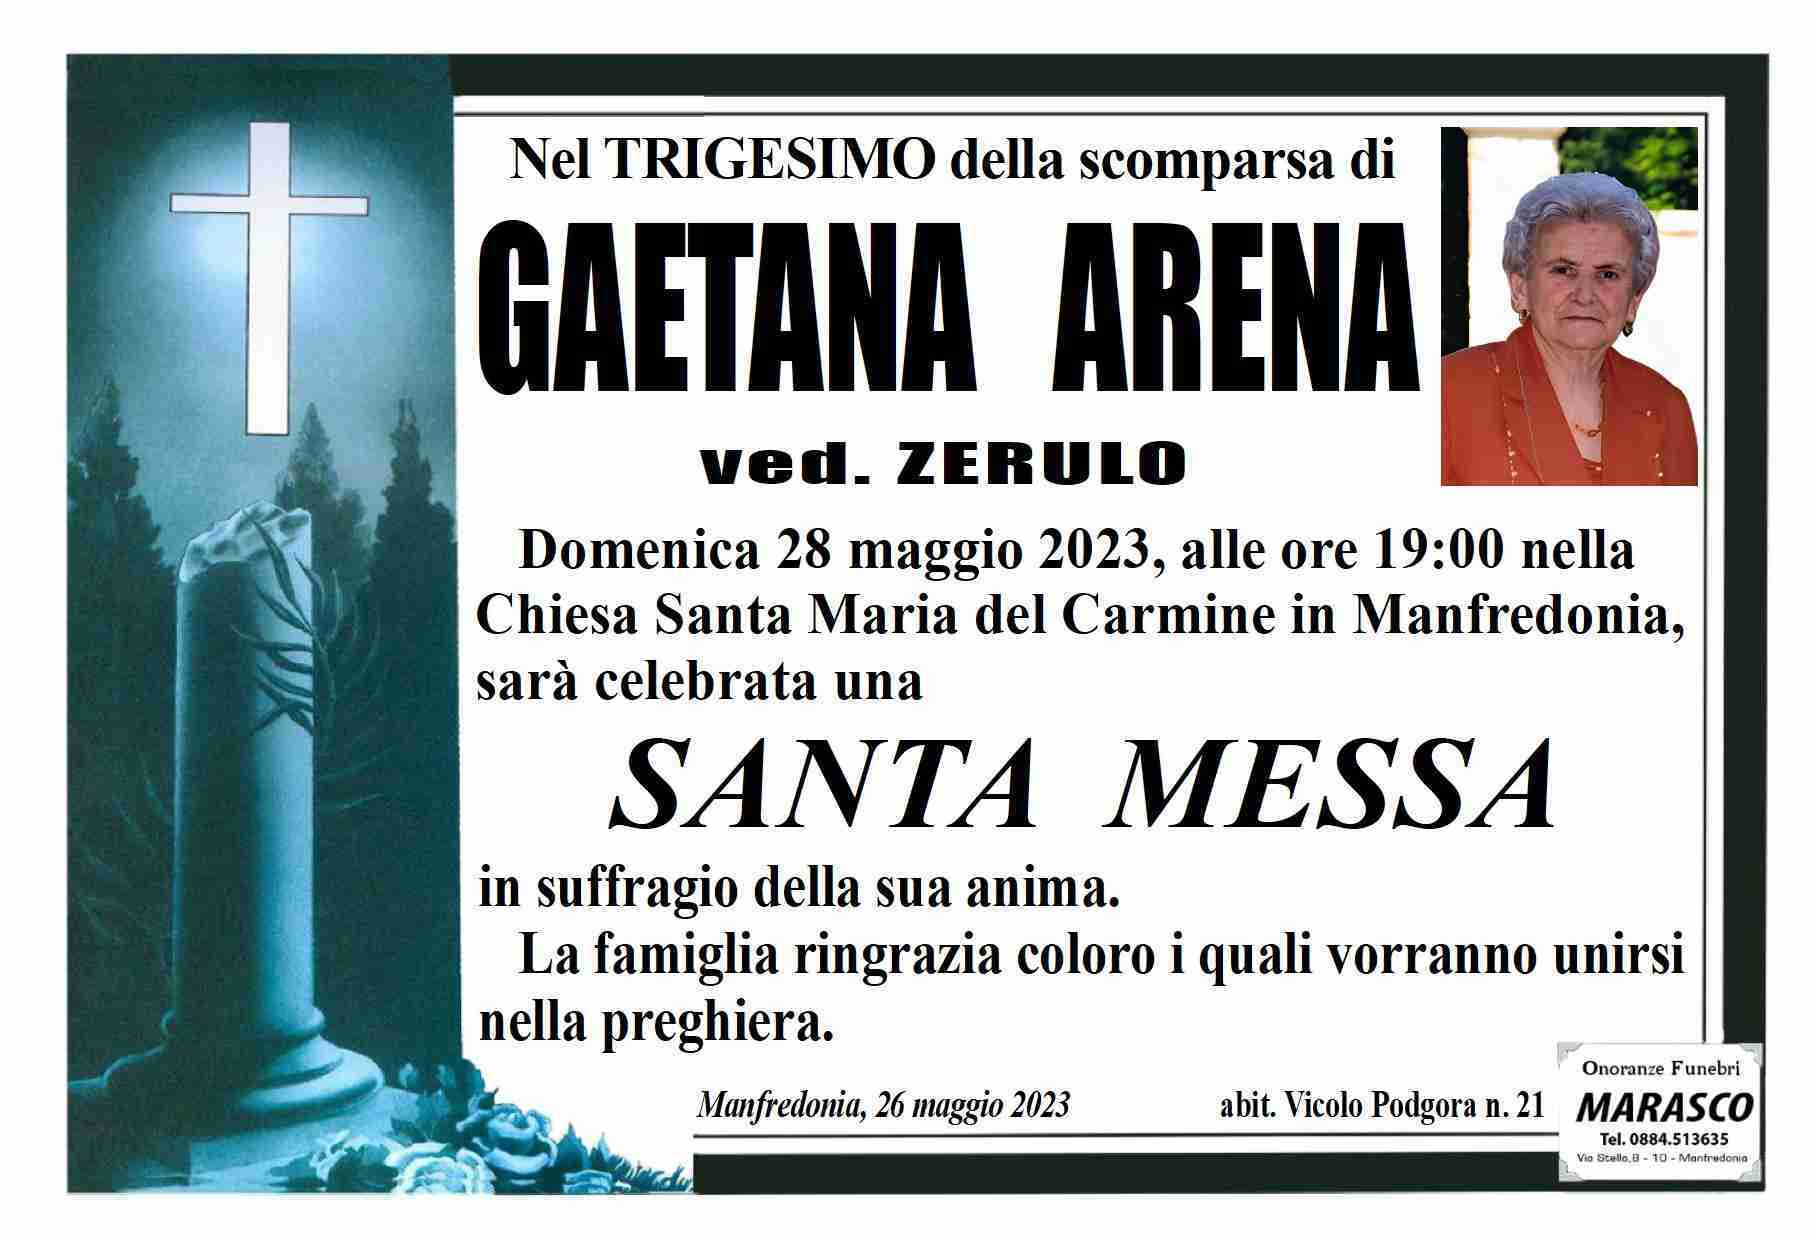 Gaetana Arena